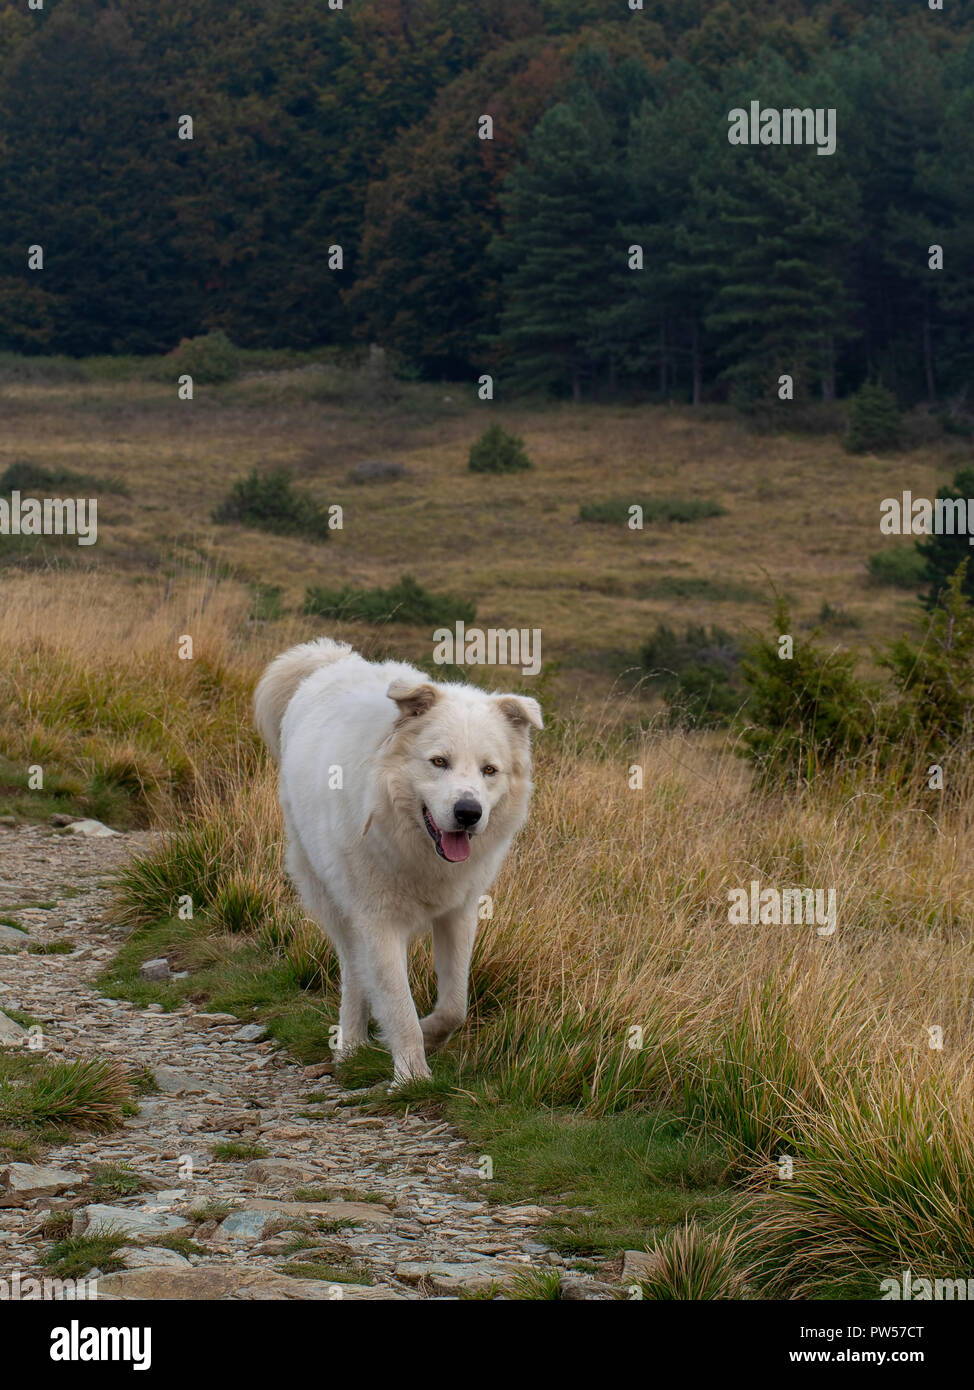 Precioso perro blanco grande girando libre en su entorno natural. La Maremma, Abruzzese ovejero. Foto de stock